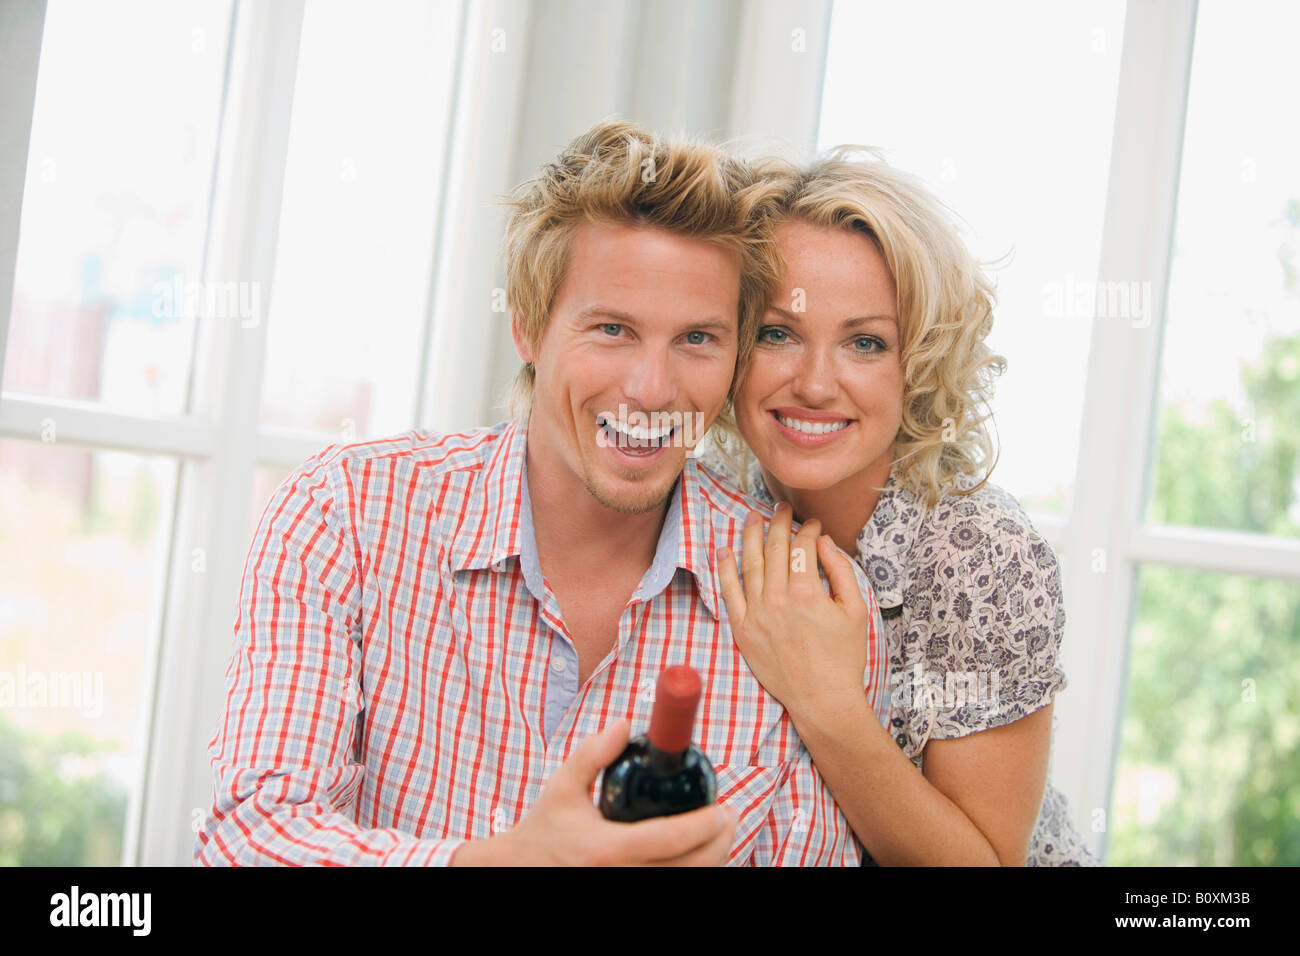 Young couple holding wine bottle, smiling, portrait Banque D'Images